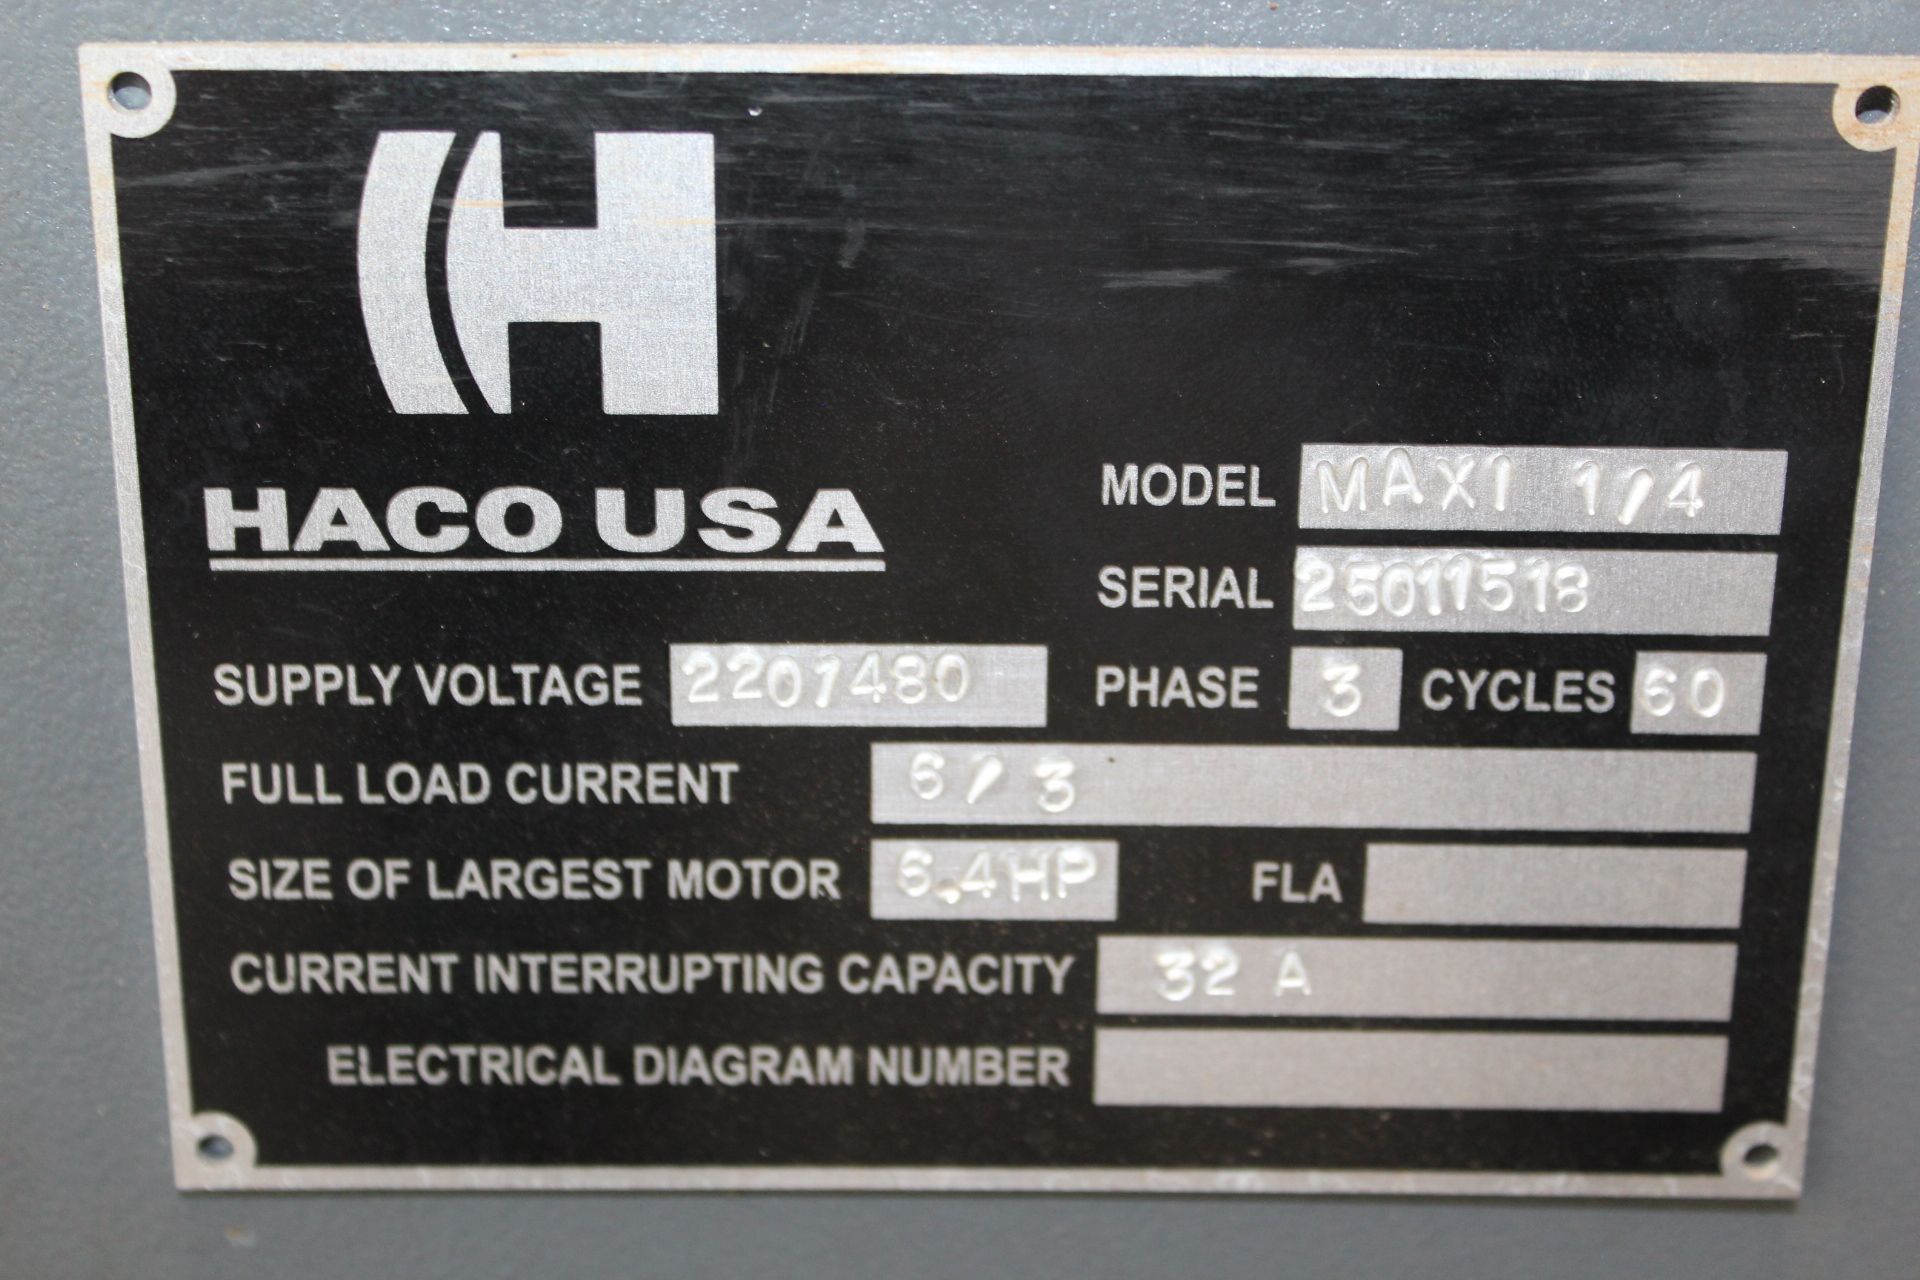 Haco Maxi 1/4 Angle Power Notcher, S/N 25011518, 220/480V, 60H, 3-Phase - Image 4 of 6